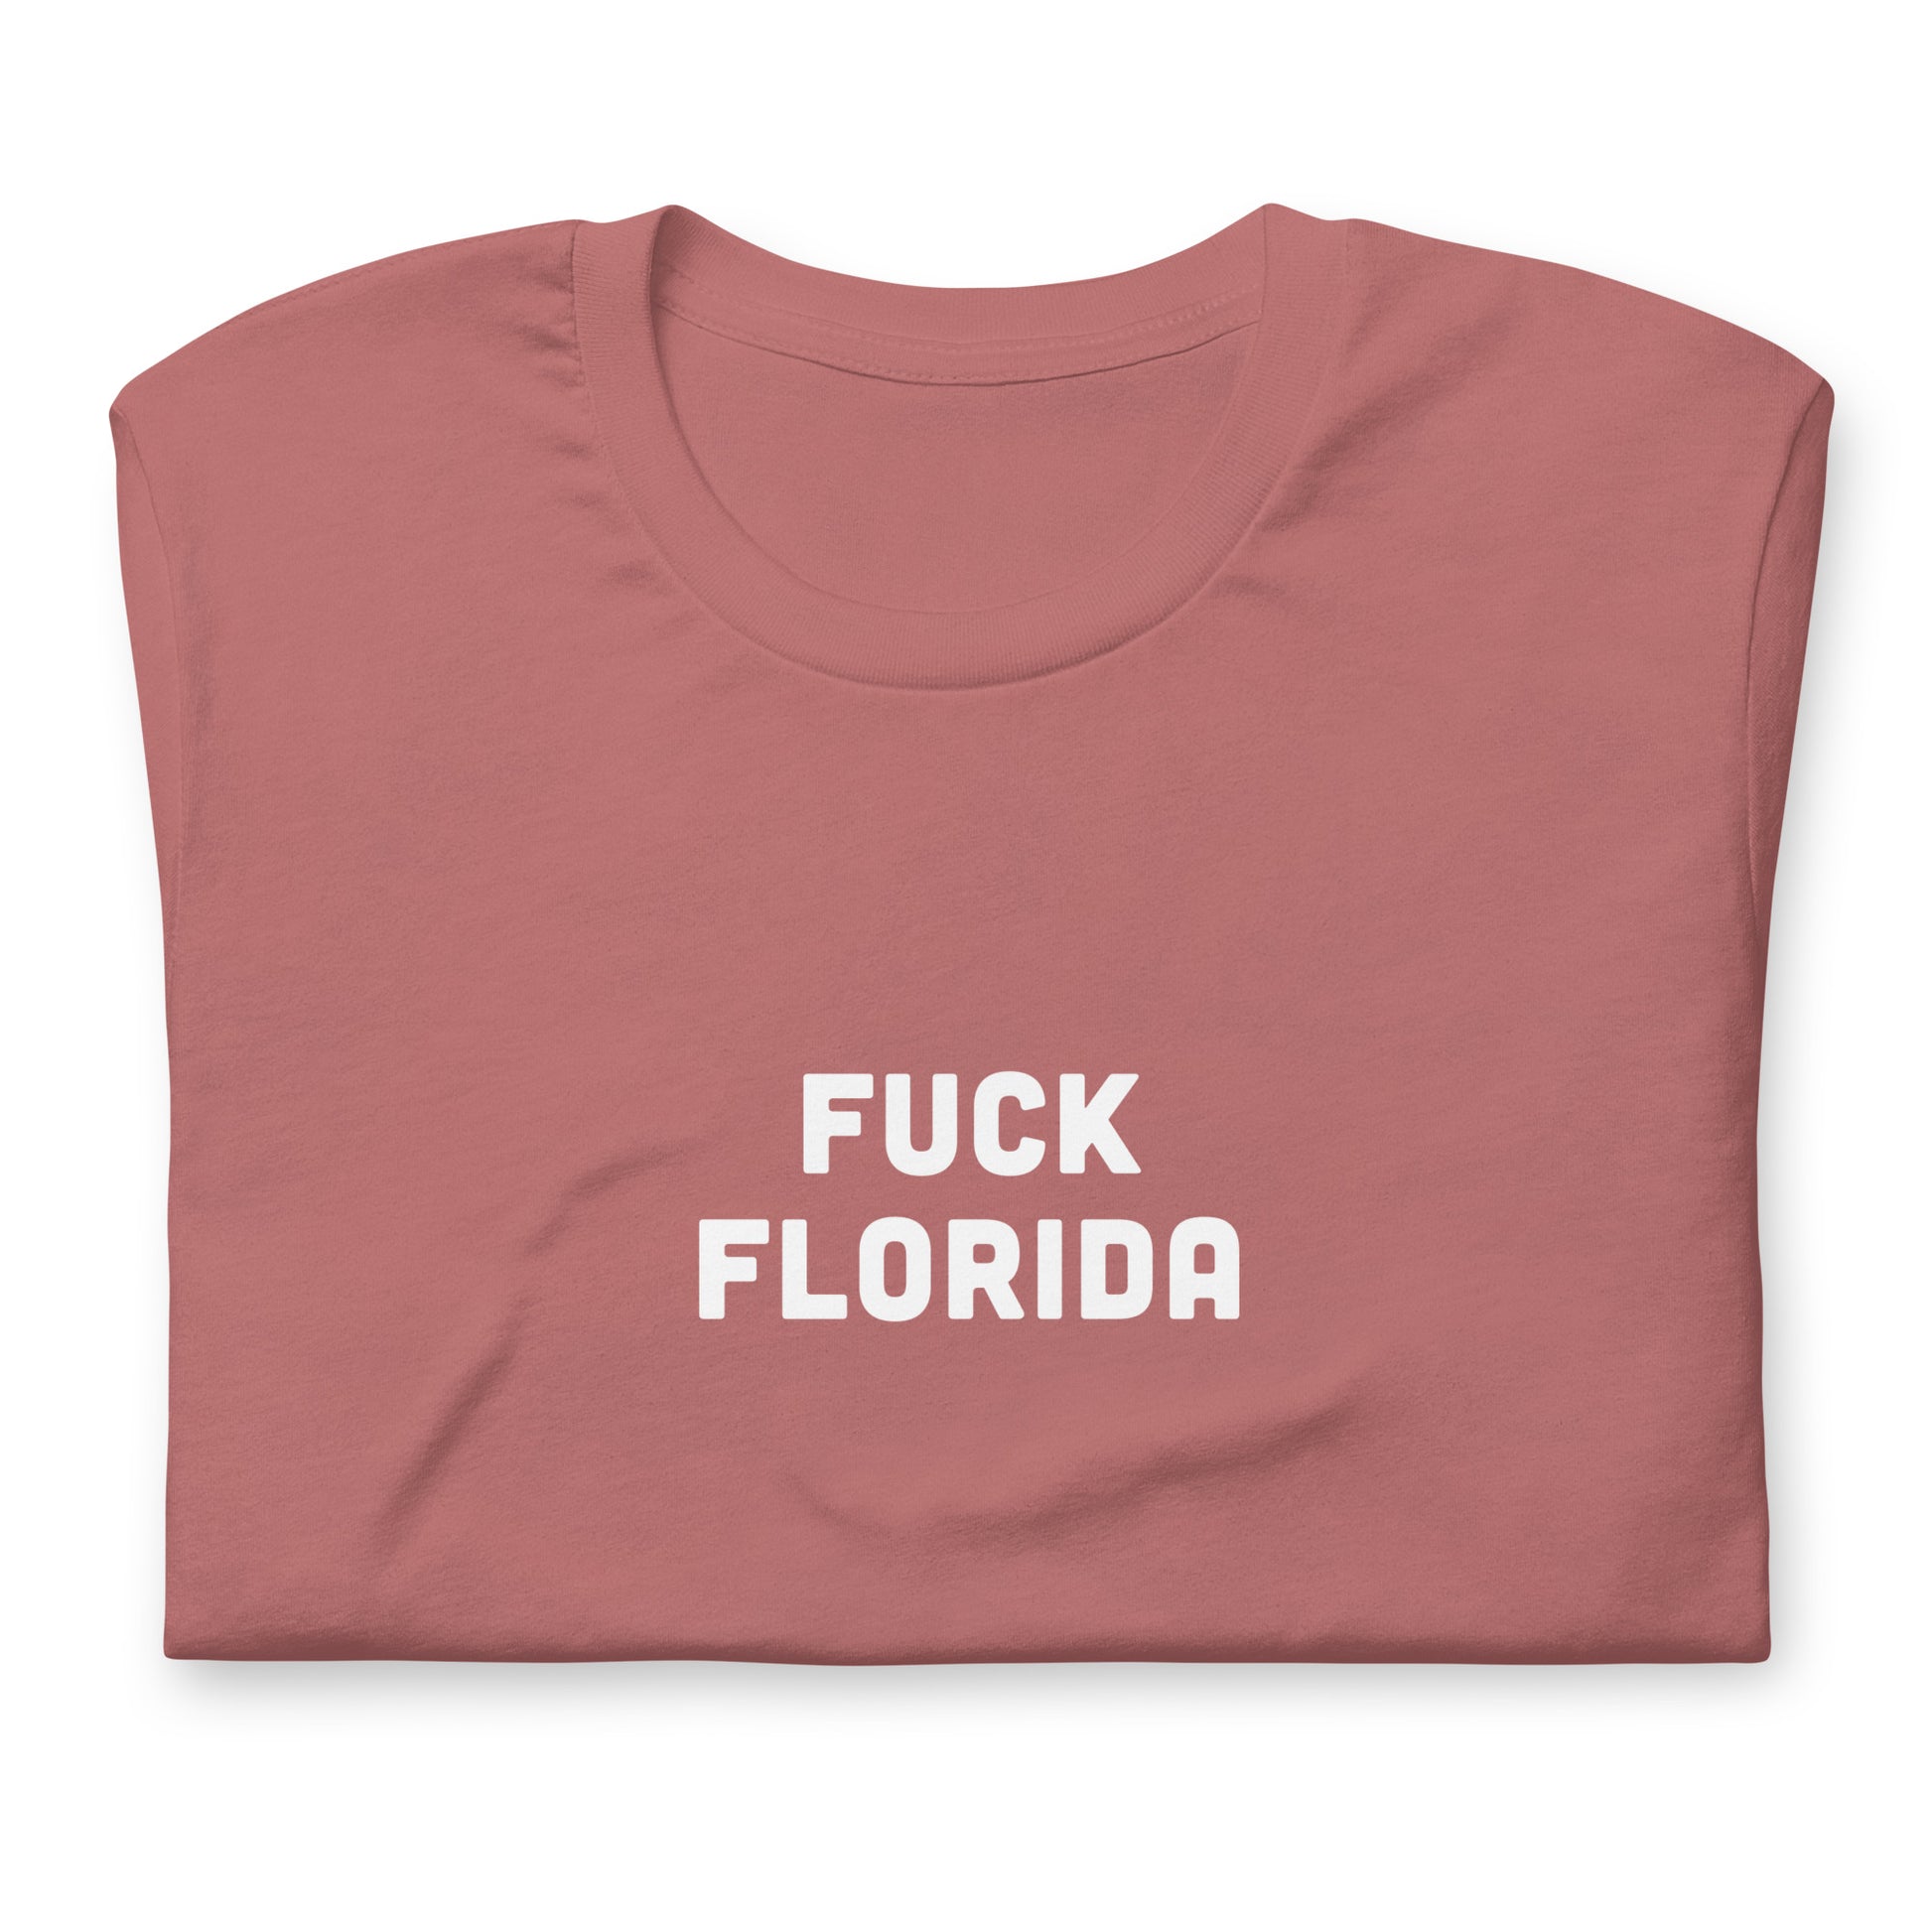 Fuck Florida T-Shirt Size 2XL Color Navy